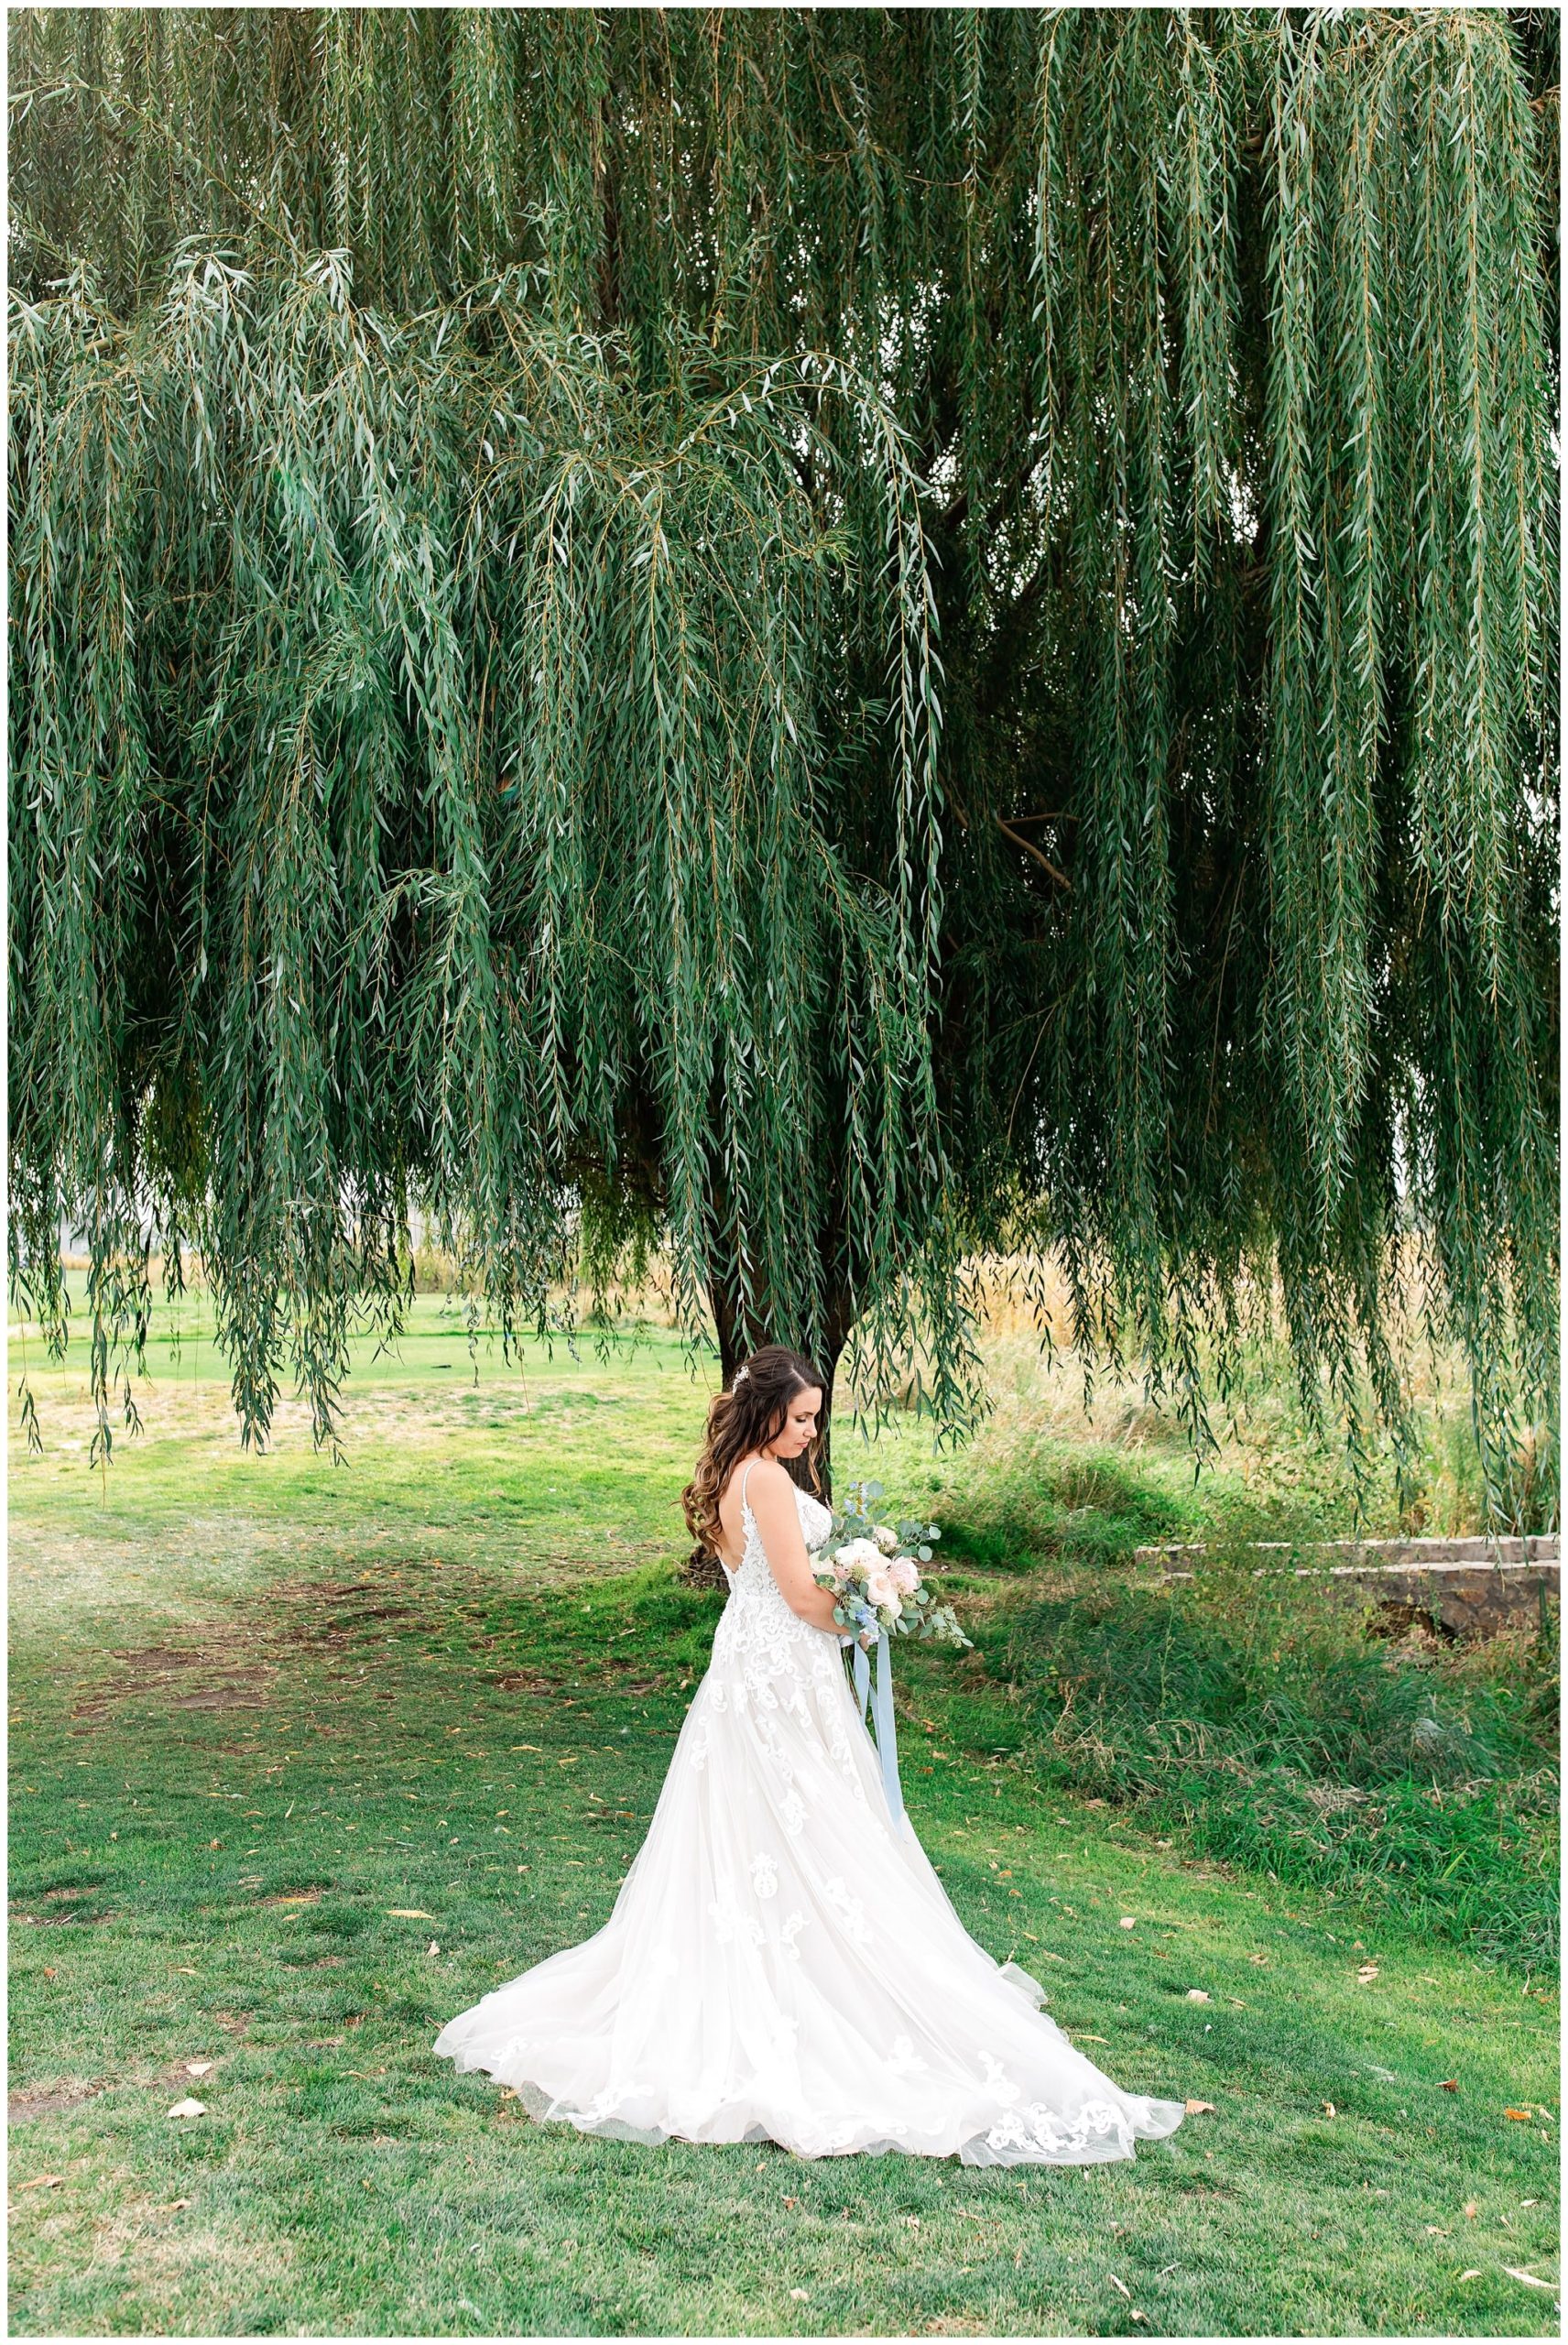 Bridal pictures under willow tree at Sleepy Ridge Wedding Venue